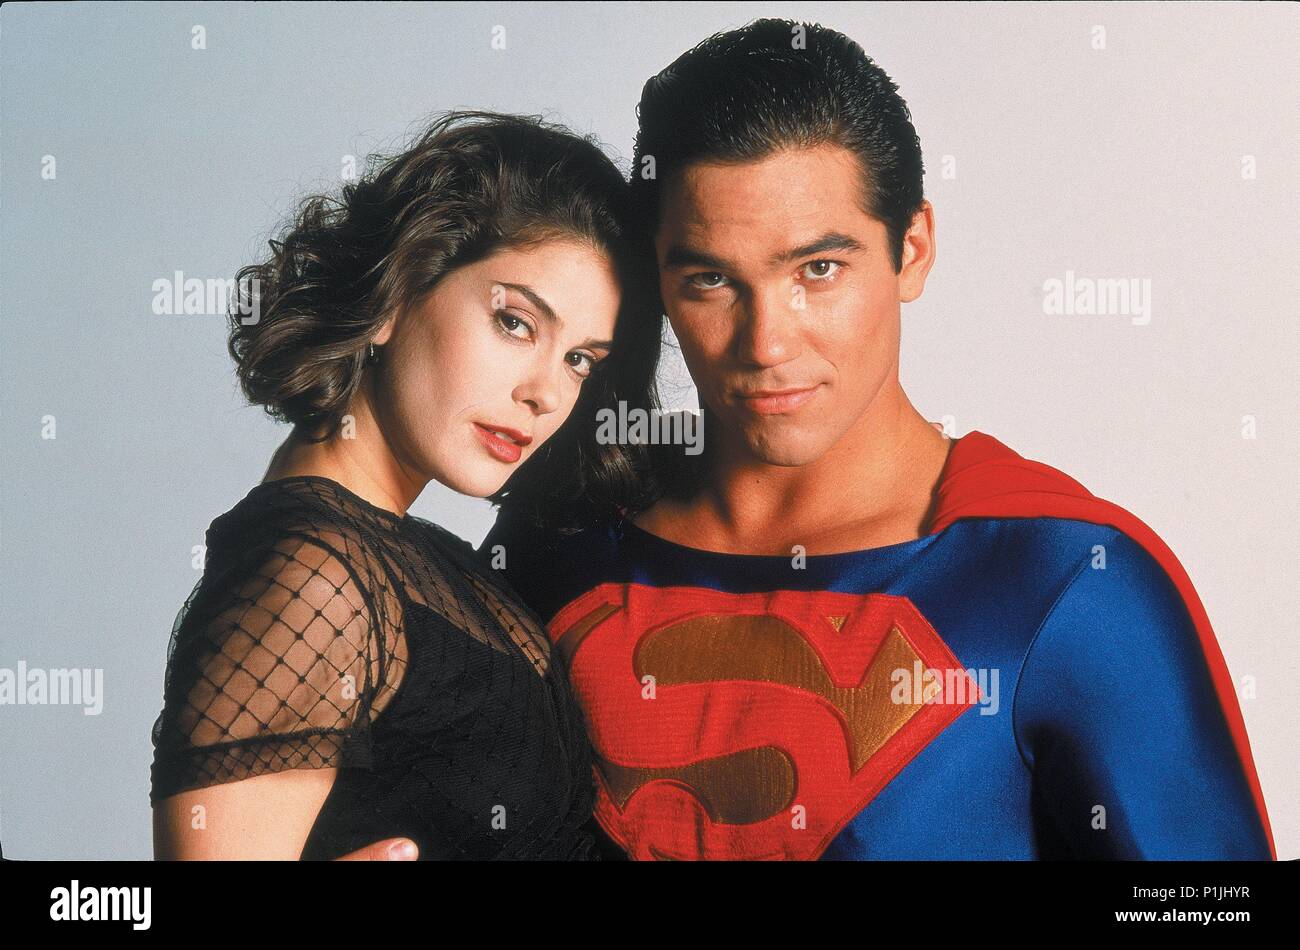 Lois lane clark kent superman hi-res stock photography and images - Alamy